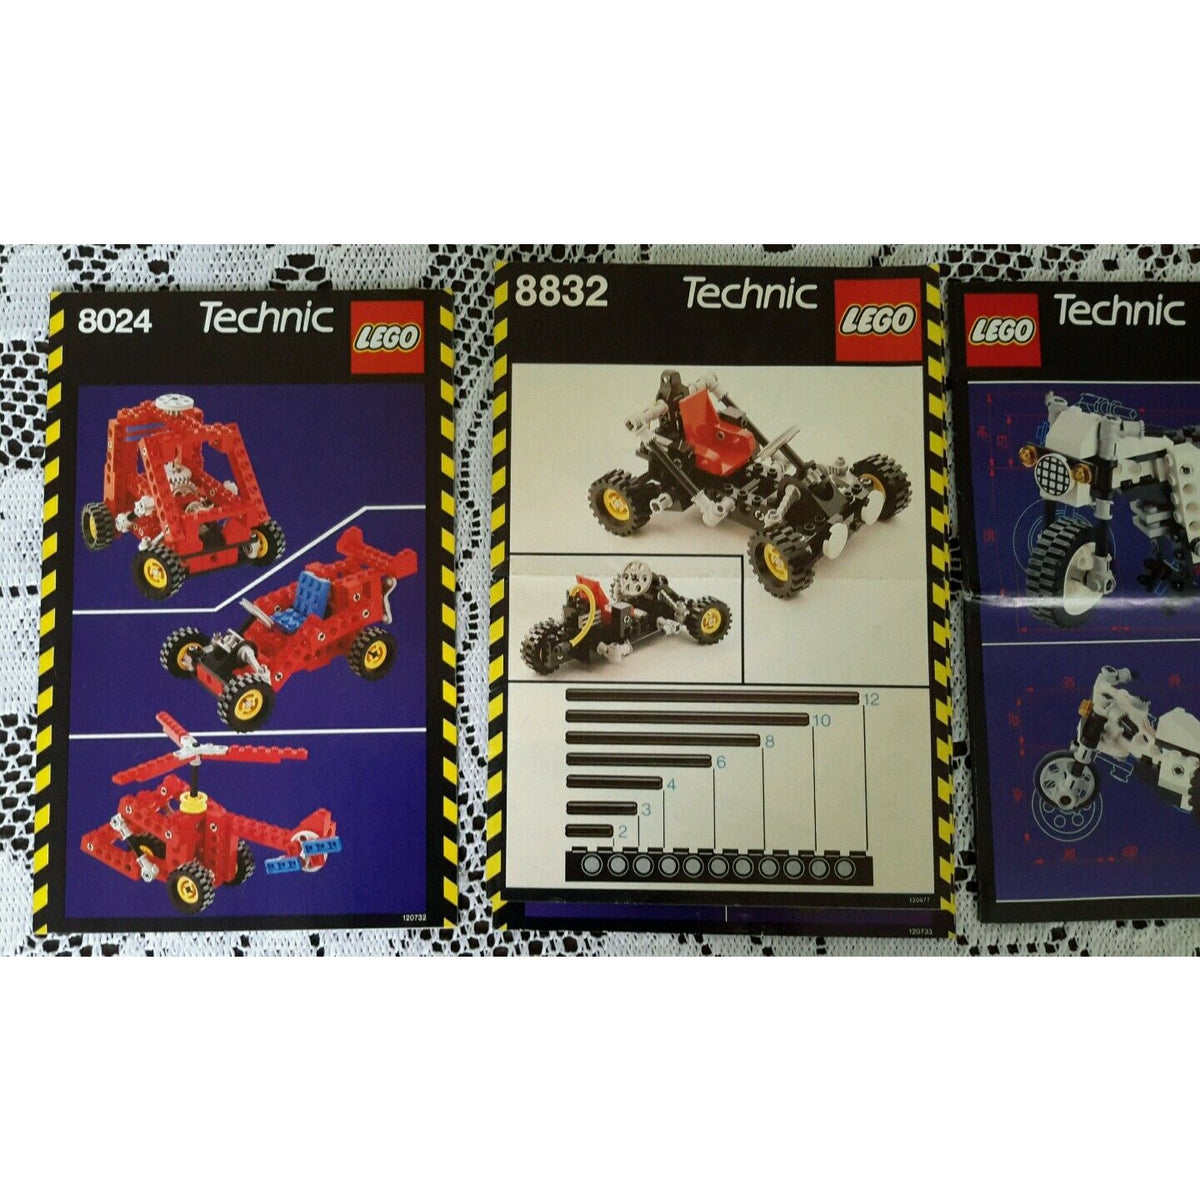 Legos 8024/8832/8810/8022 Technic Universal Instructions Manua Mainely Bargains